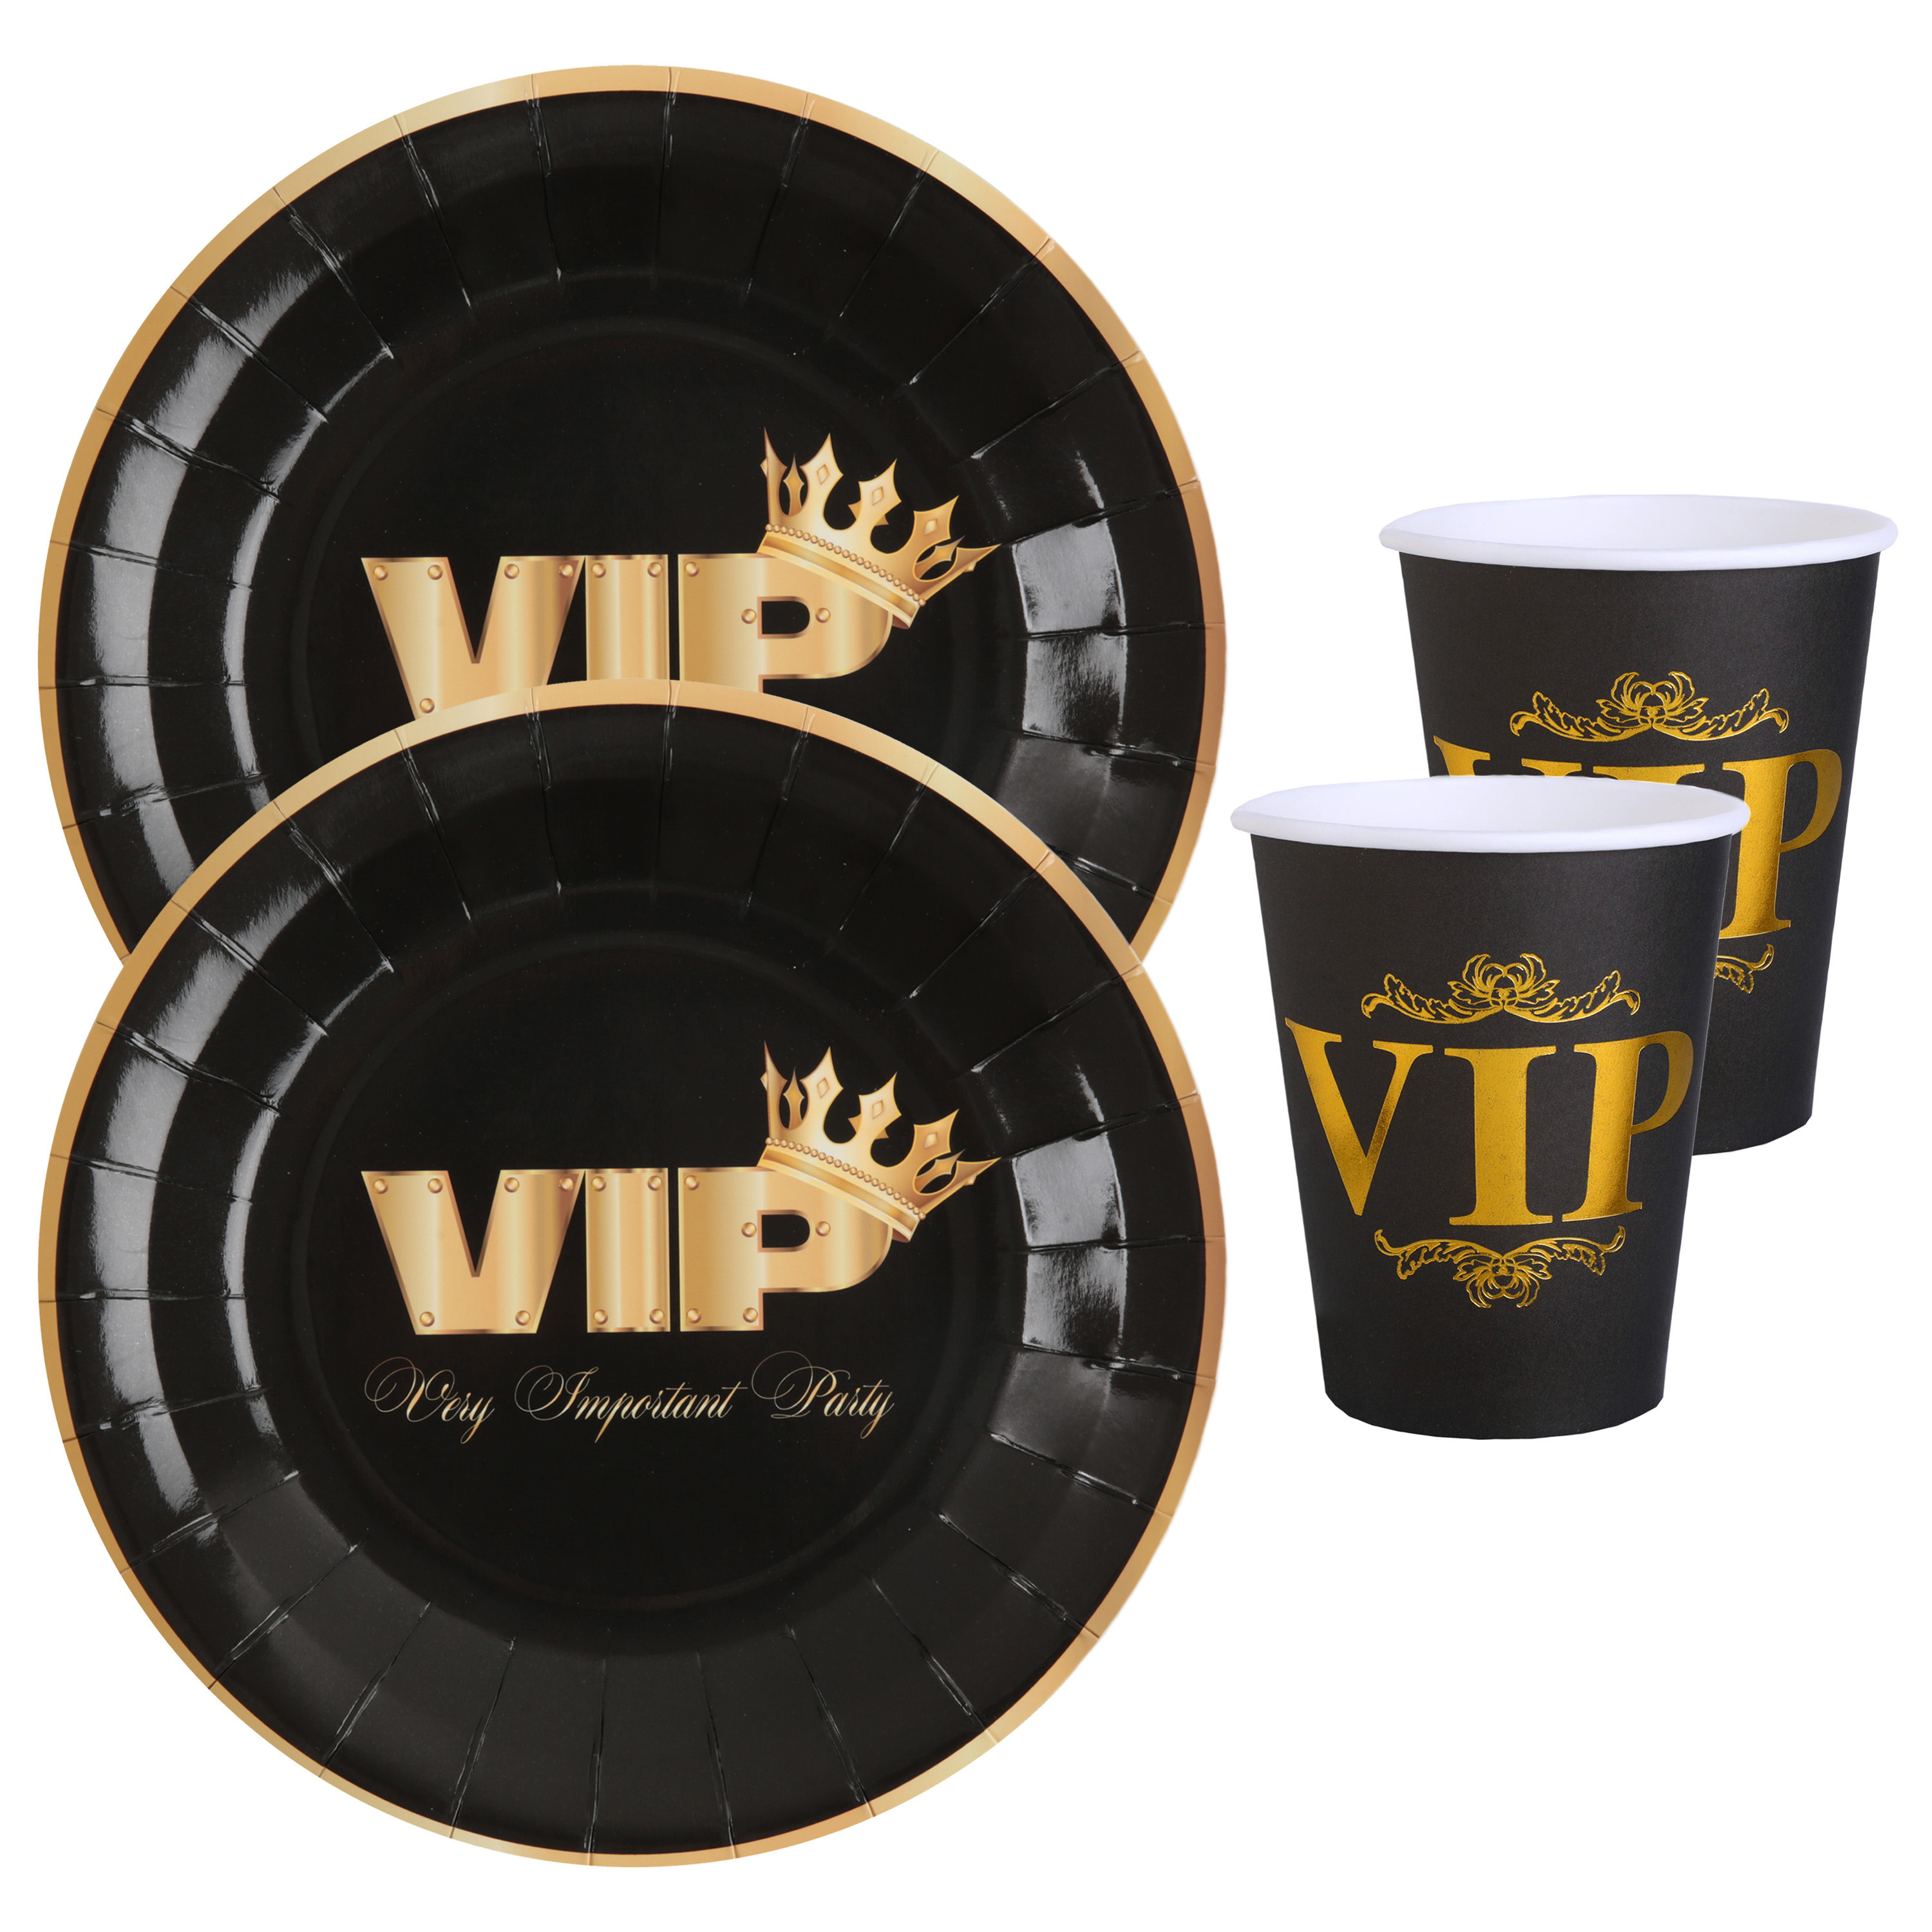 VIP feest wegwerp servies set 10x bordjes-10x bekers zwart-goud